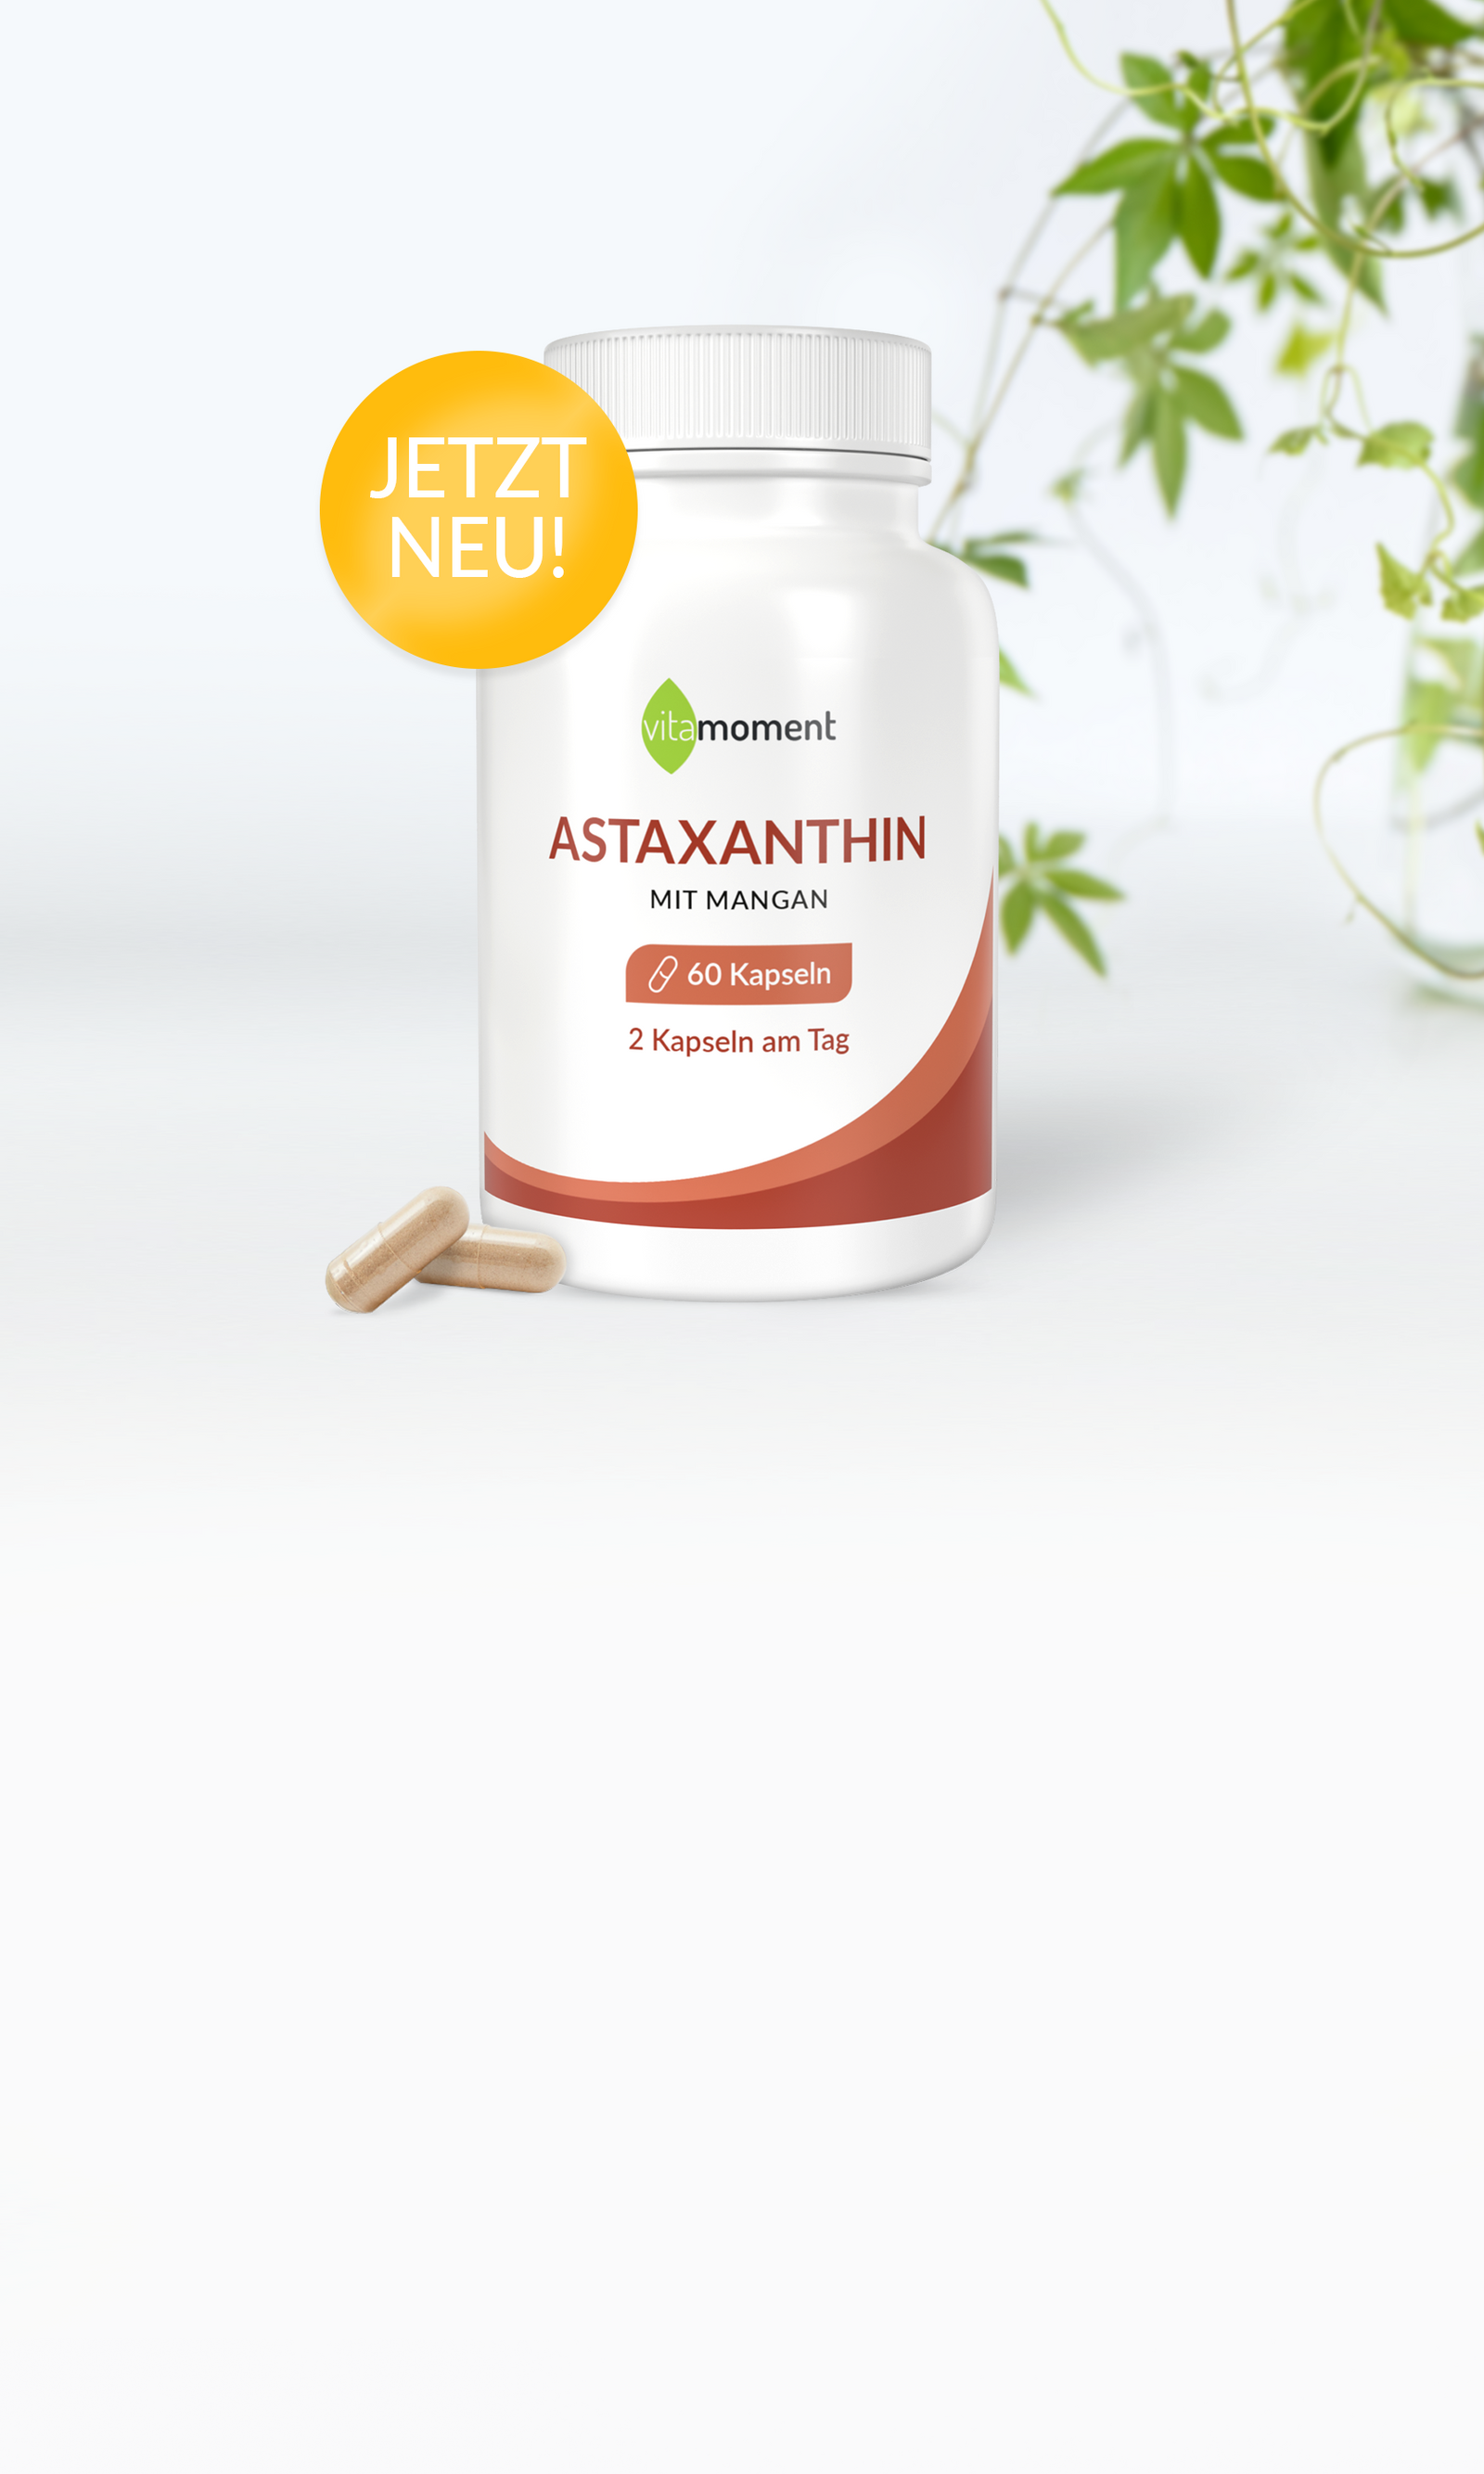 Vm start astaxanthin shop header mobile